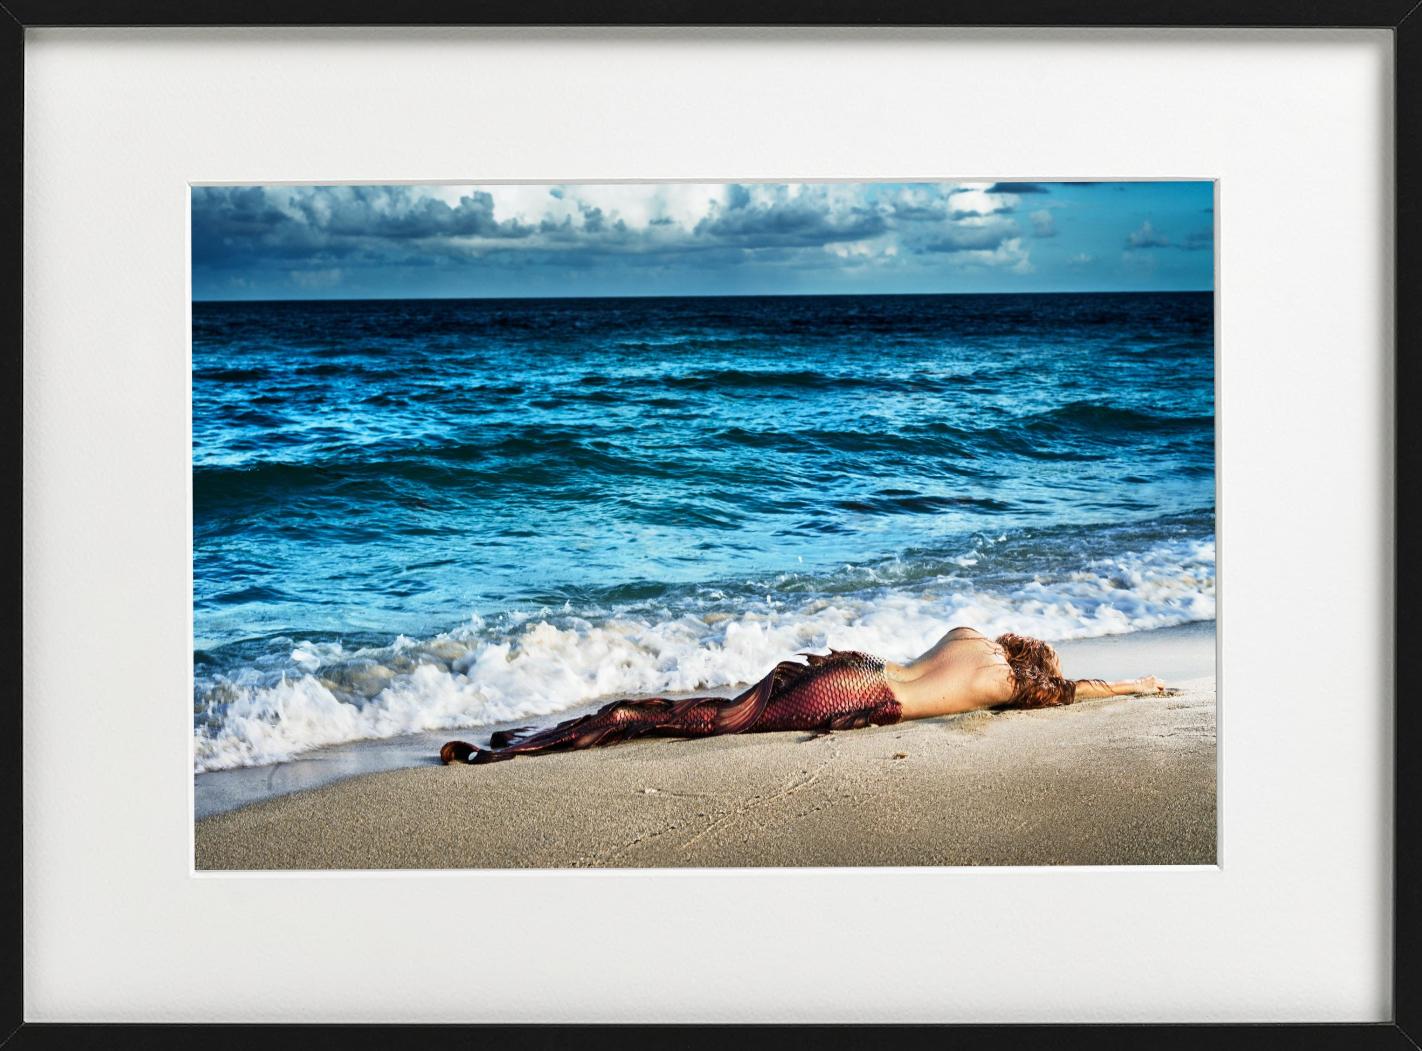 Mermaid in Paradise - Mermaid lying on the beach, fine art photography, 2014 - Contemporary Photograph by David Drebin